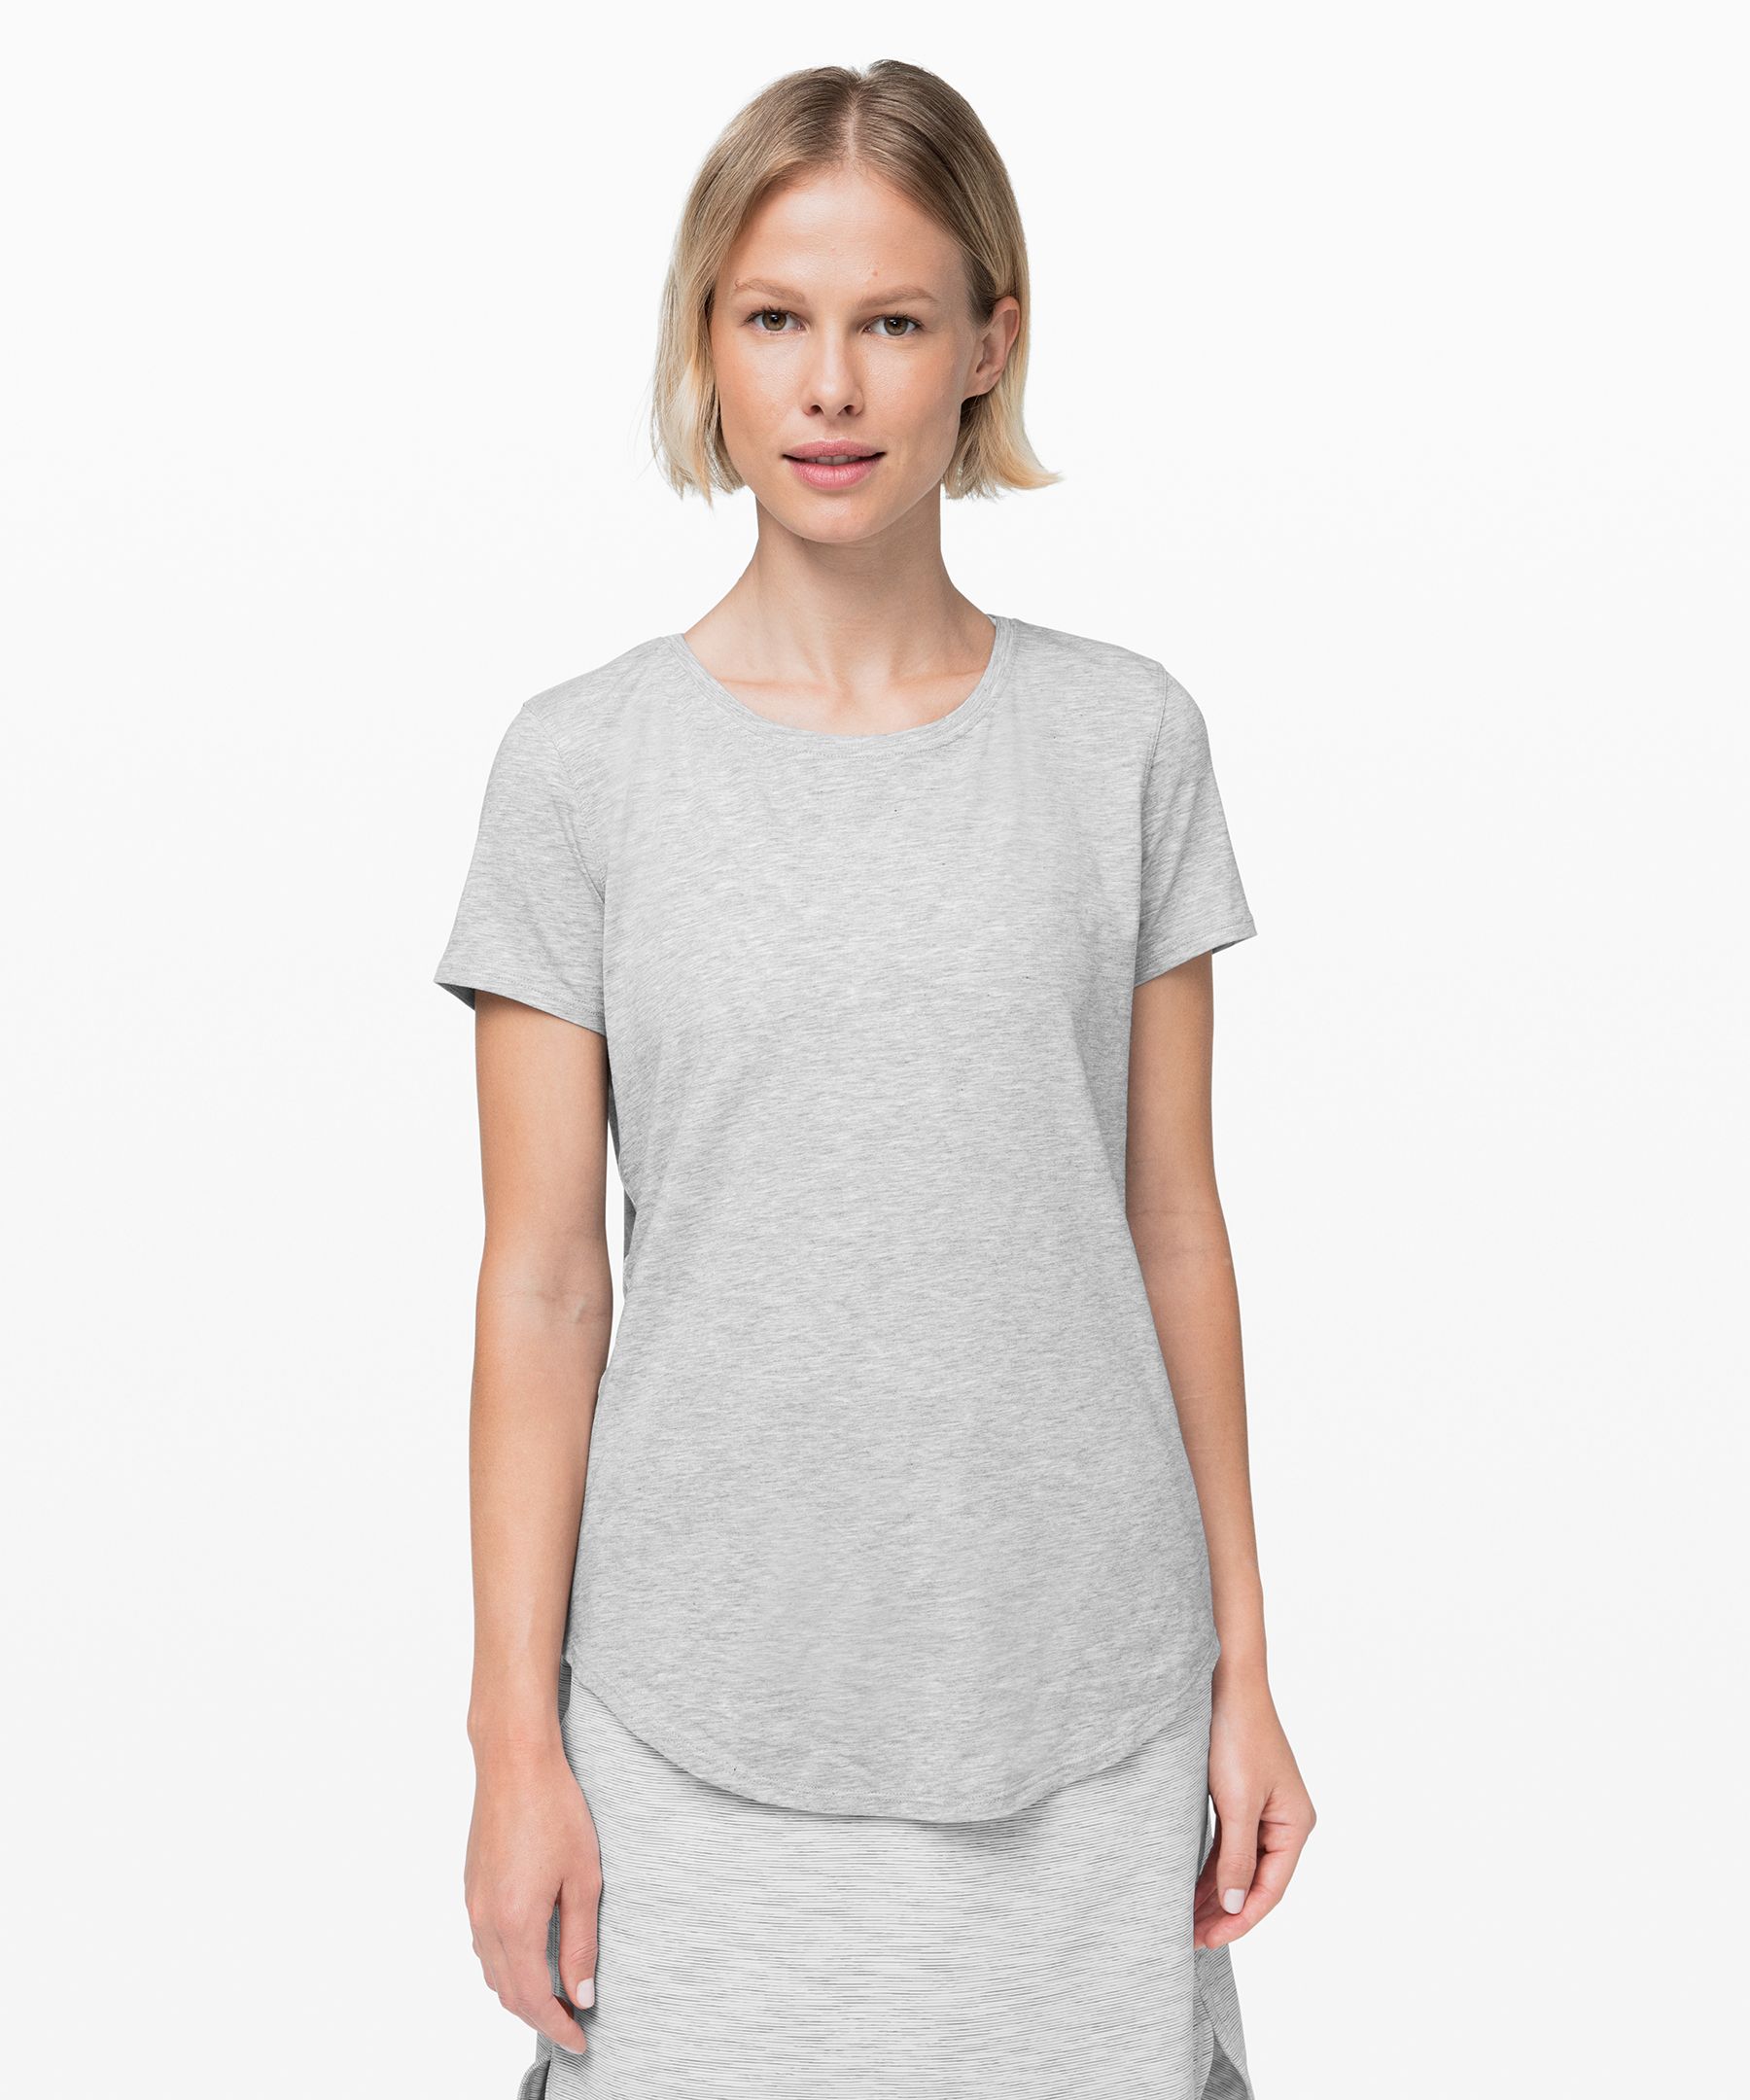 Lululemon Love Crew Short Sleeve T-shirt Lightweight In Heathered Core Light Grey